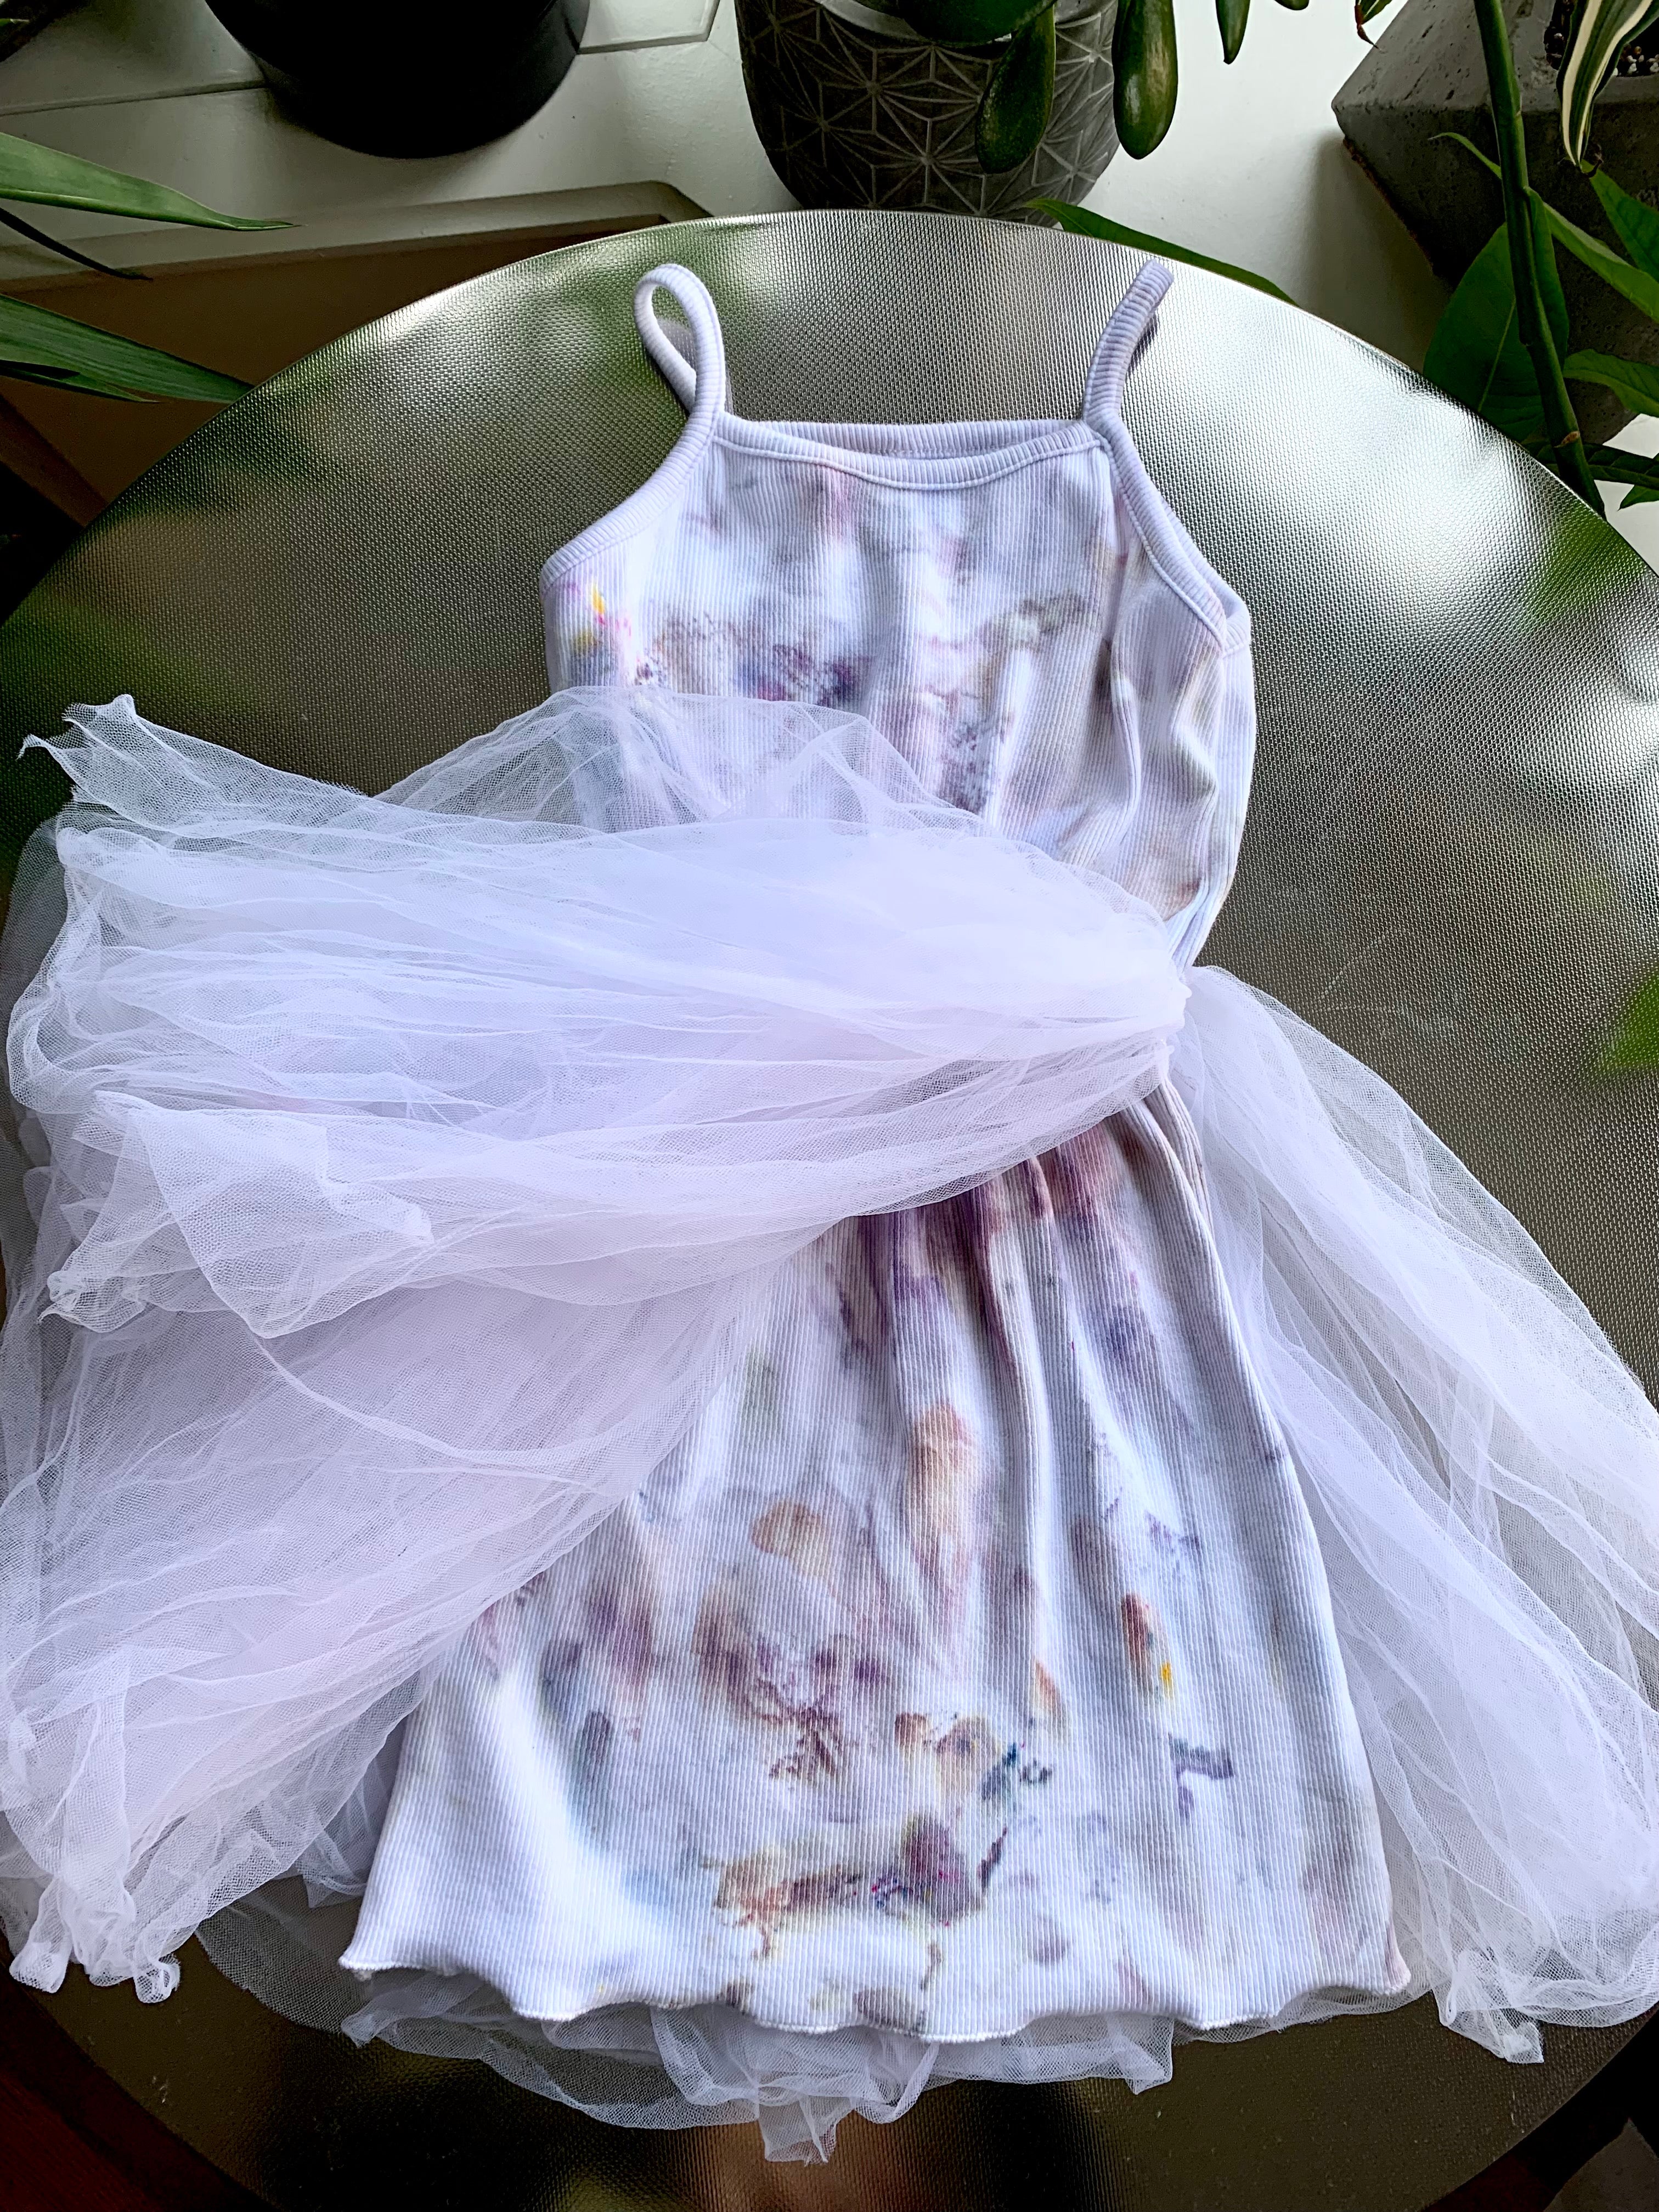 Ice Dyed Tutu and Cotton Dress